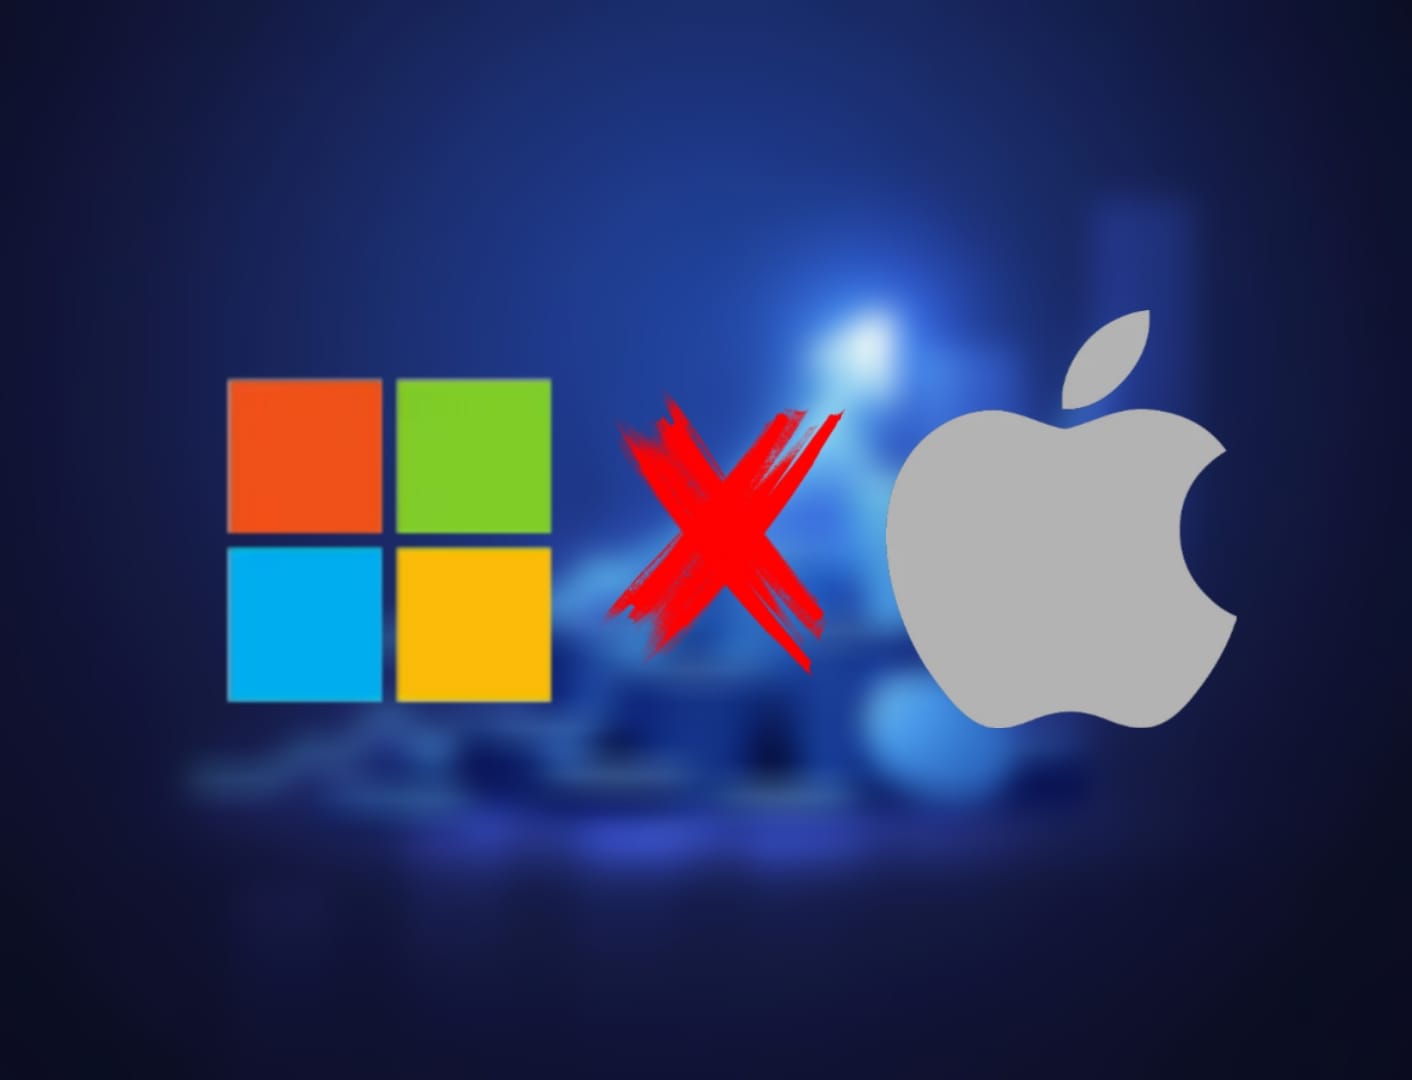 Imagem ilustra rivalidade entre Microsoft e Apple